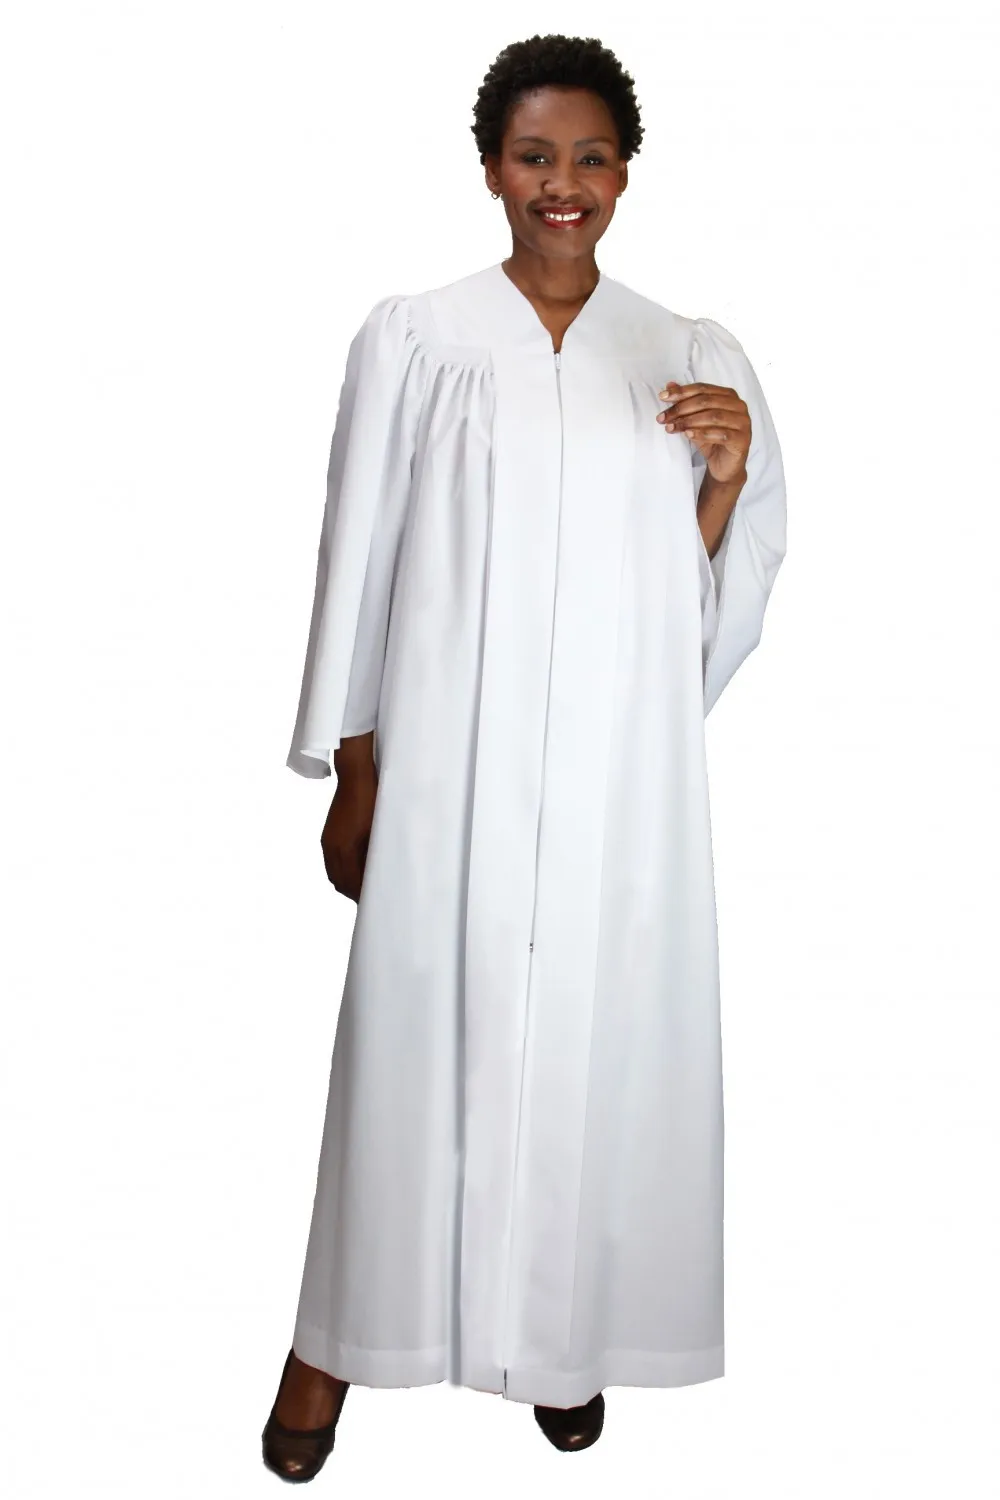 Clergy Uniform 99